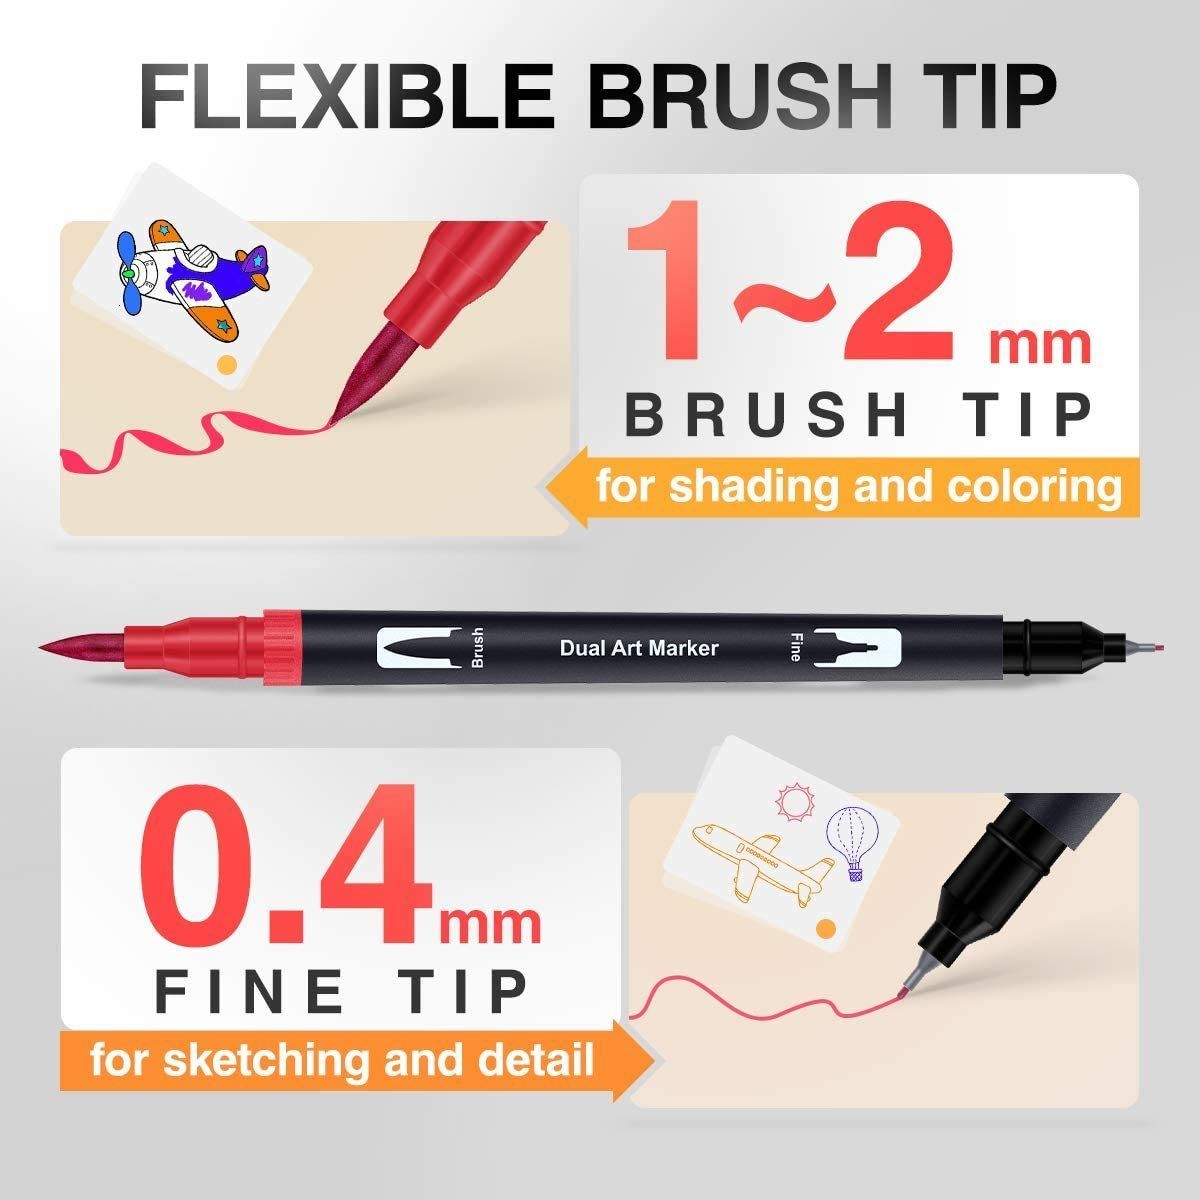 Markers Dual Tip Brush Pens Felt Tip Pen Set Pens Art Markers For